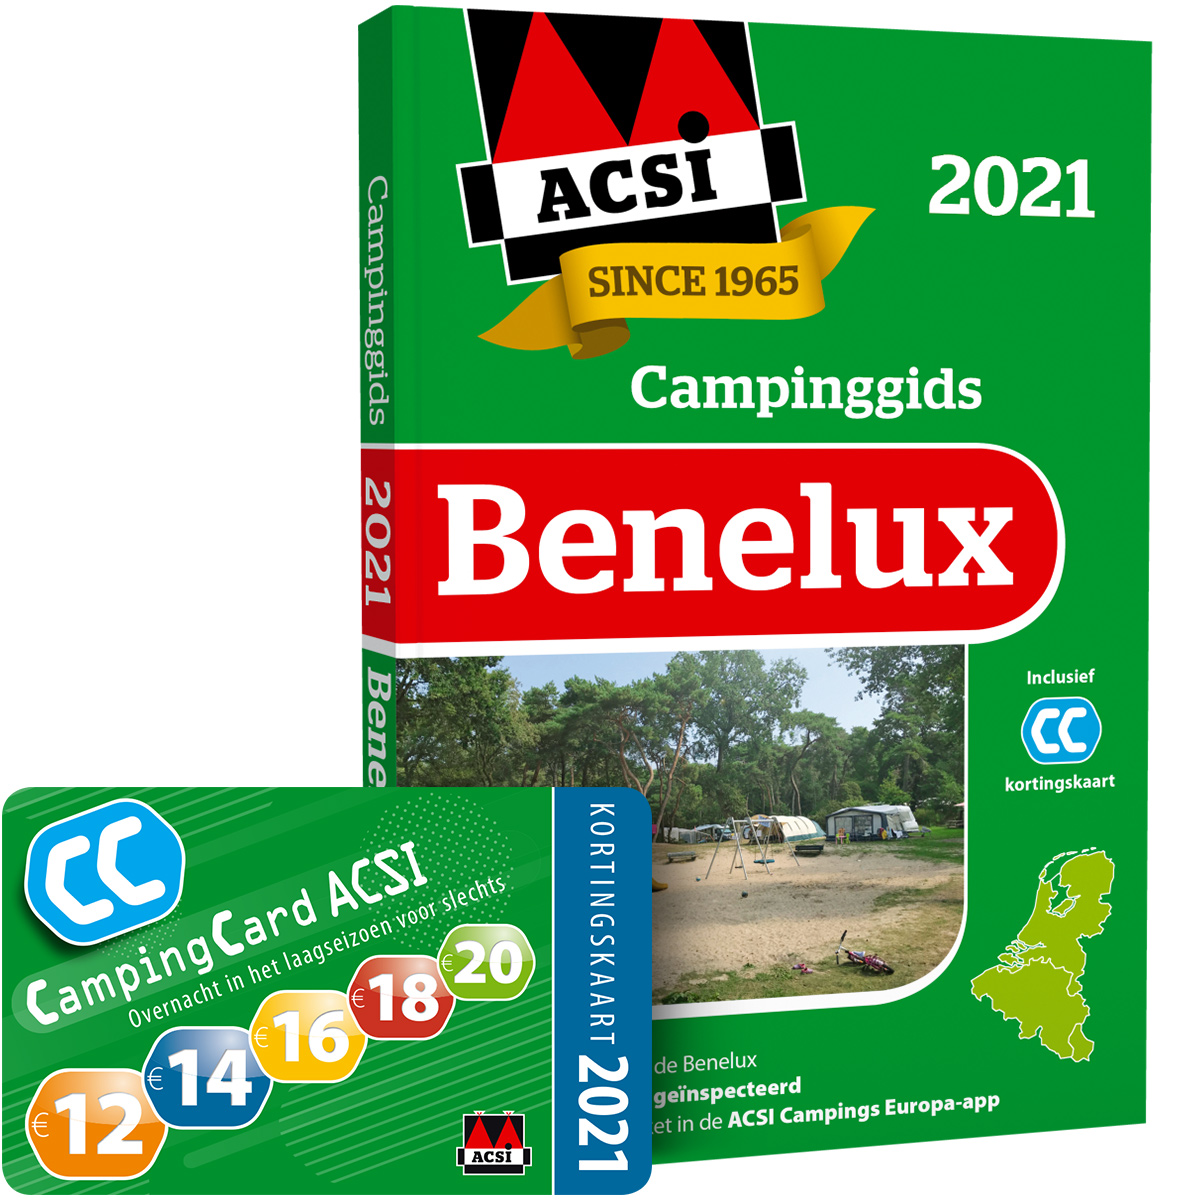 ACSI Campinggids Benelux